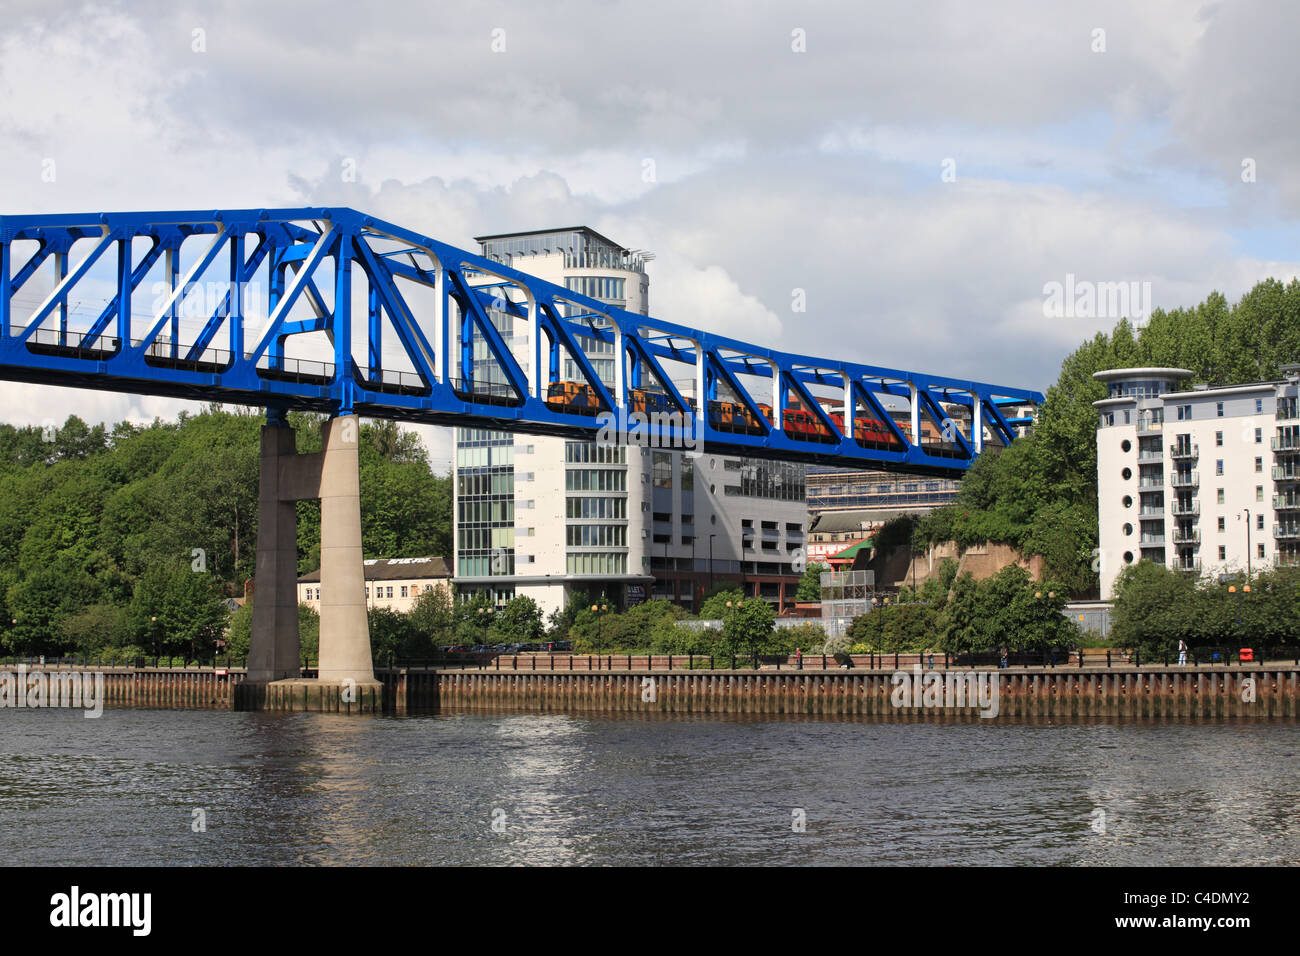 A Tyneside Metro light railway train crosses the river Tyne on a steel girder bridge, Newcastle upon Tyne, England, UK Stock Photo